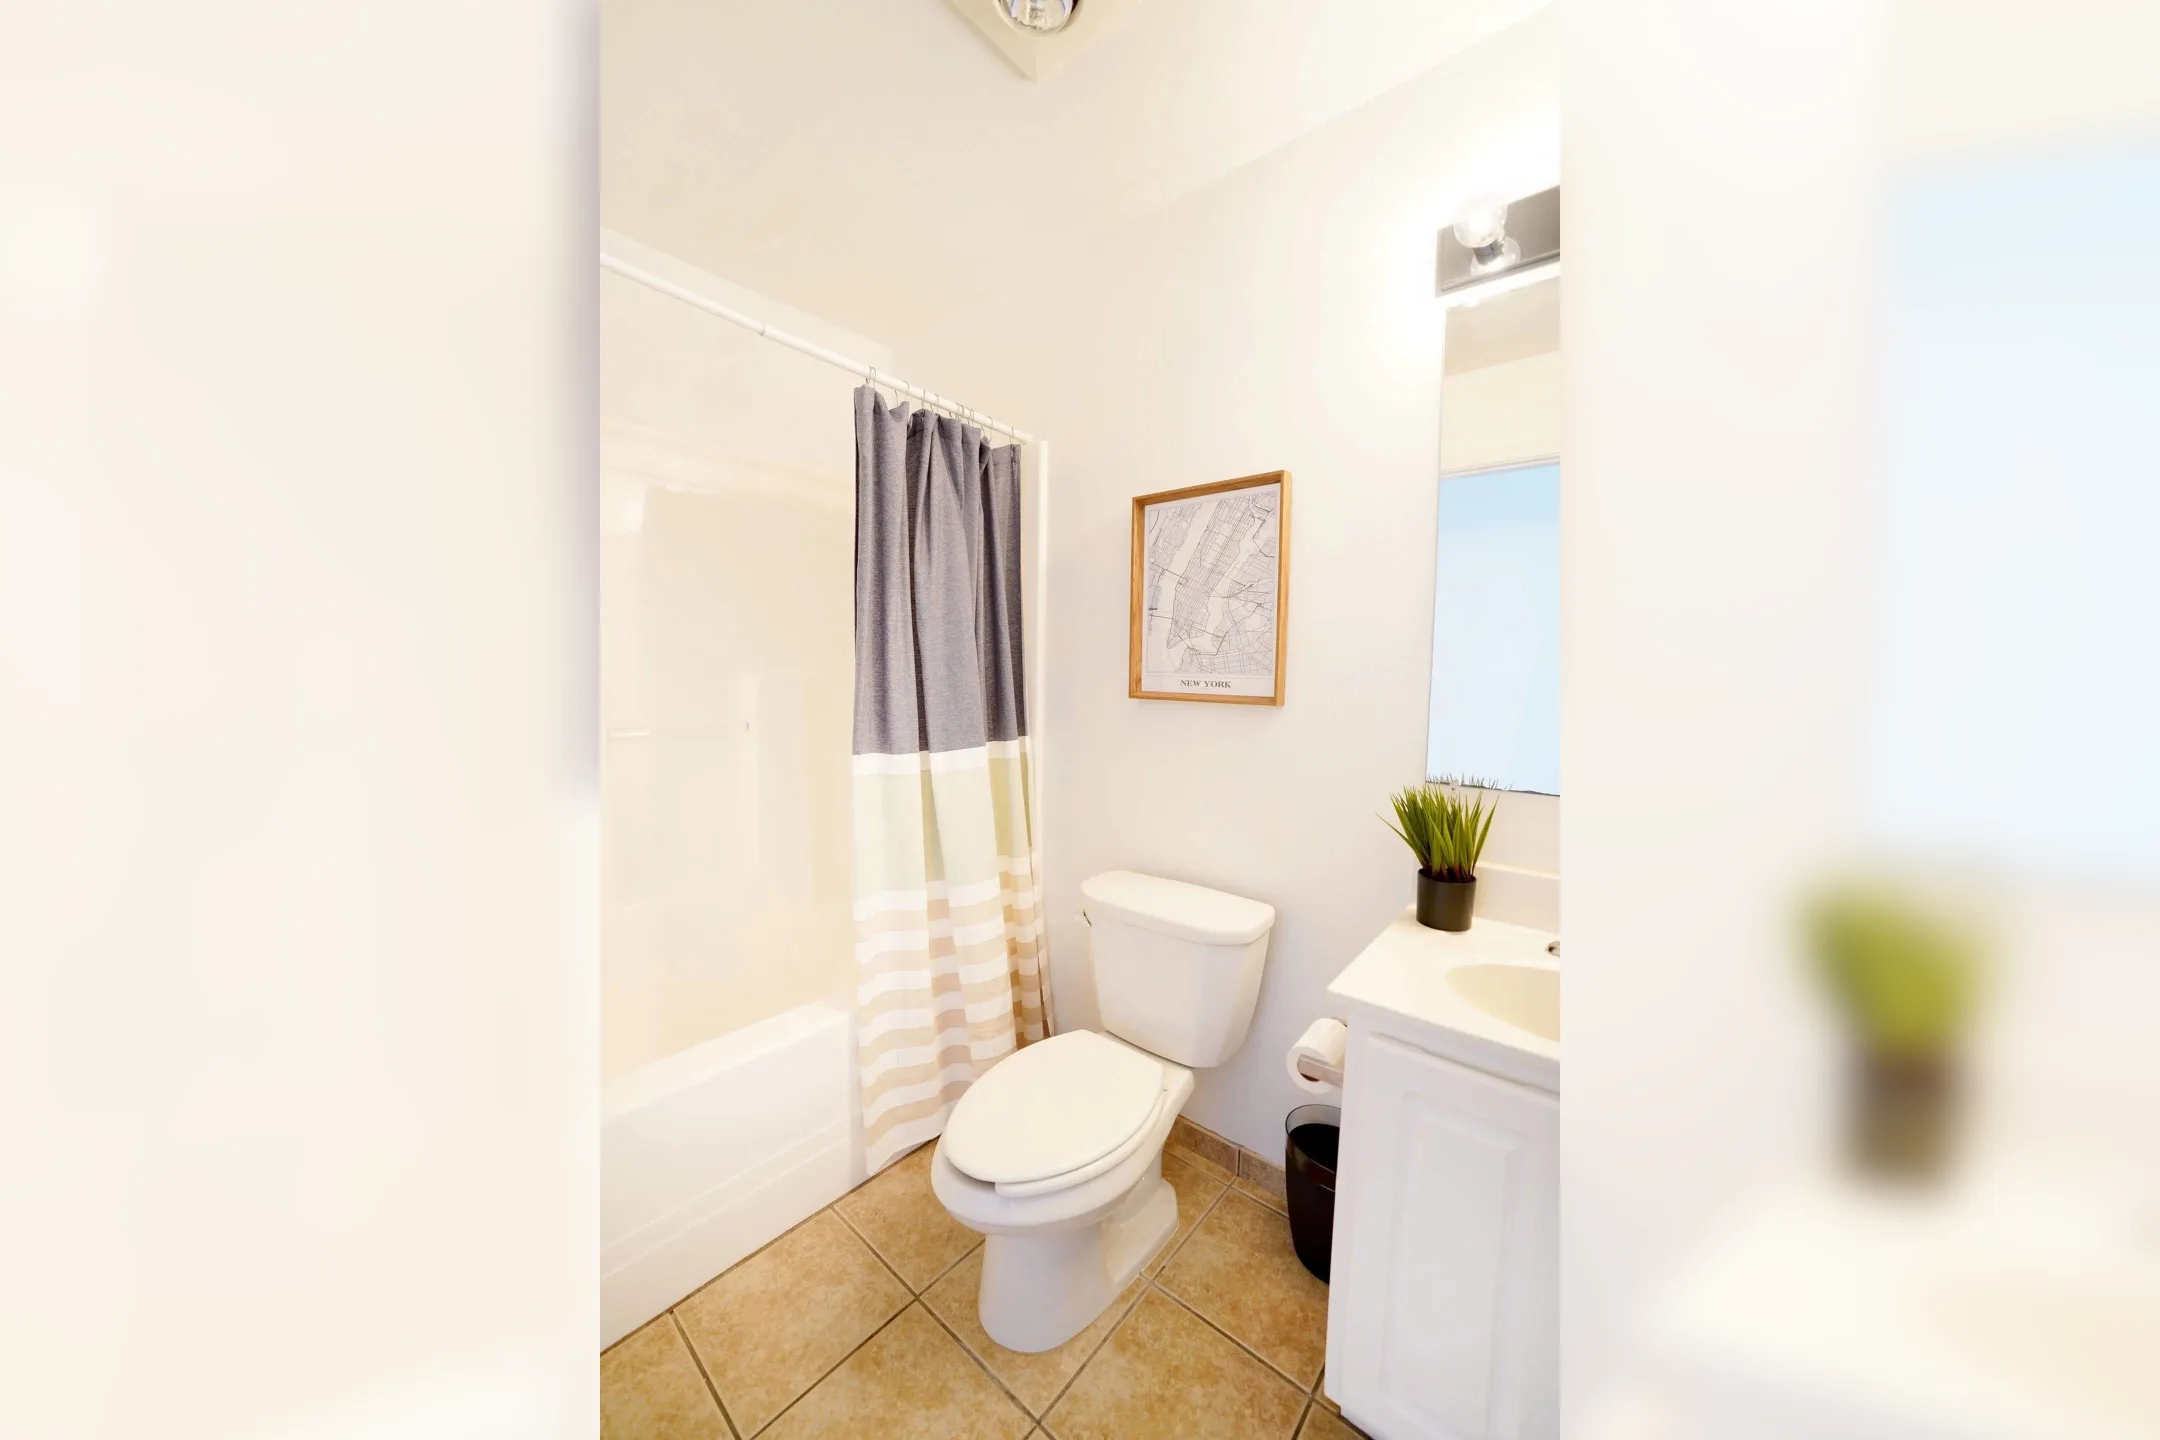 Bathroom - Ribbon Place Apartments - York, PA